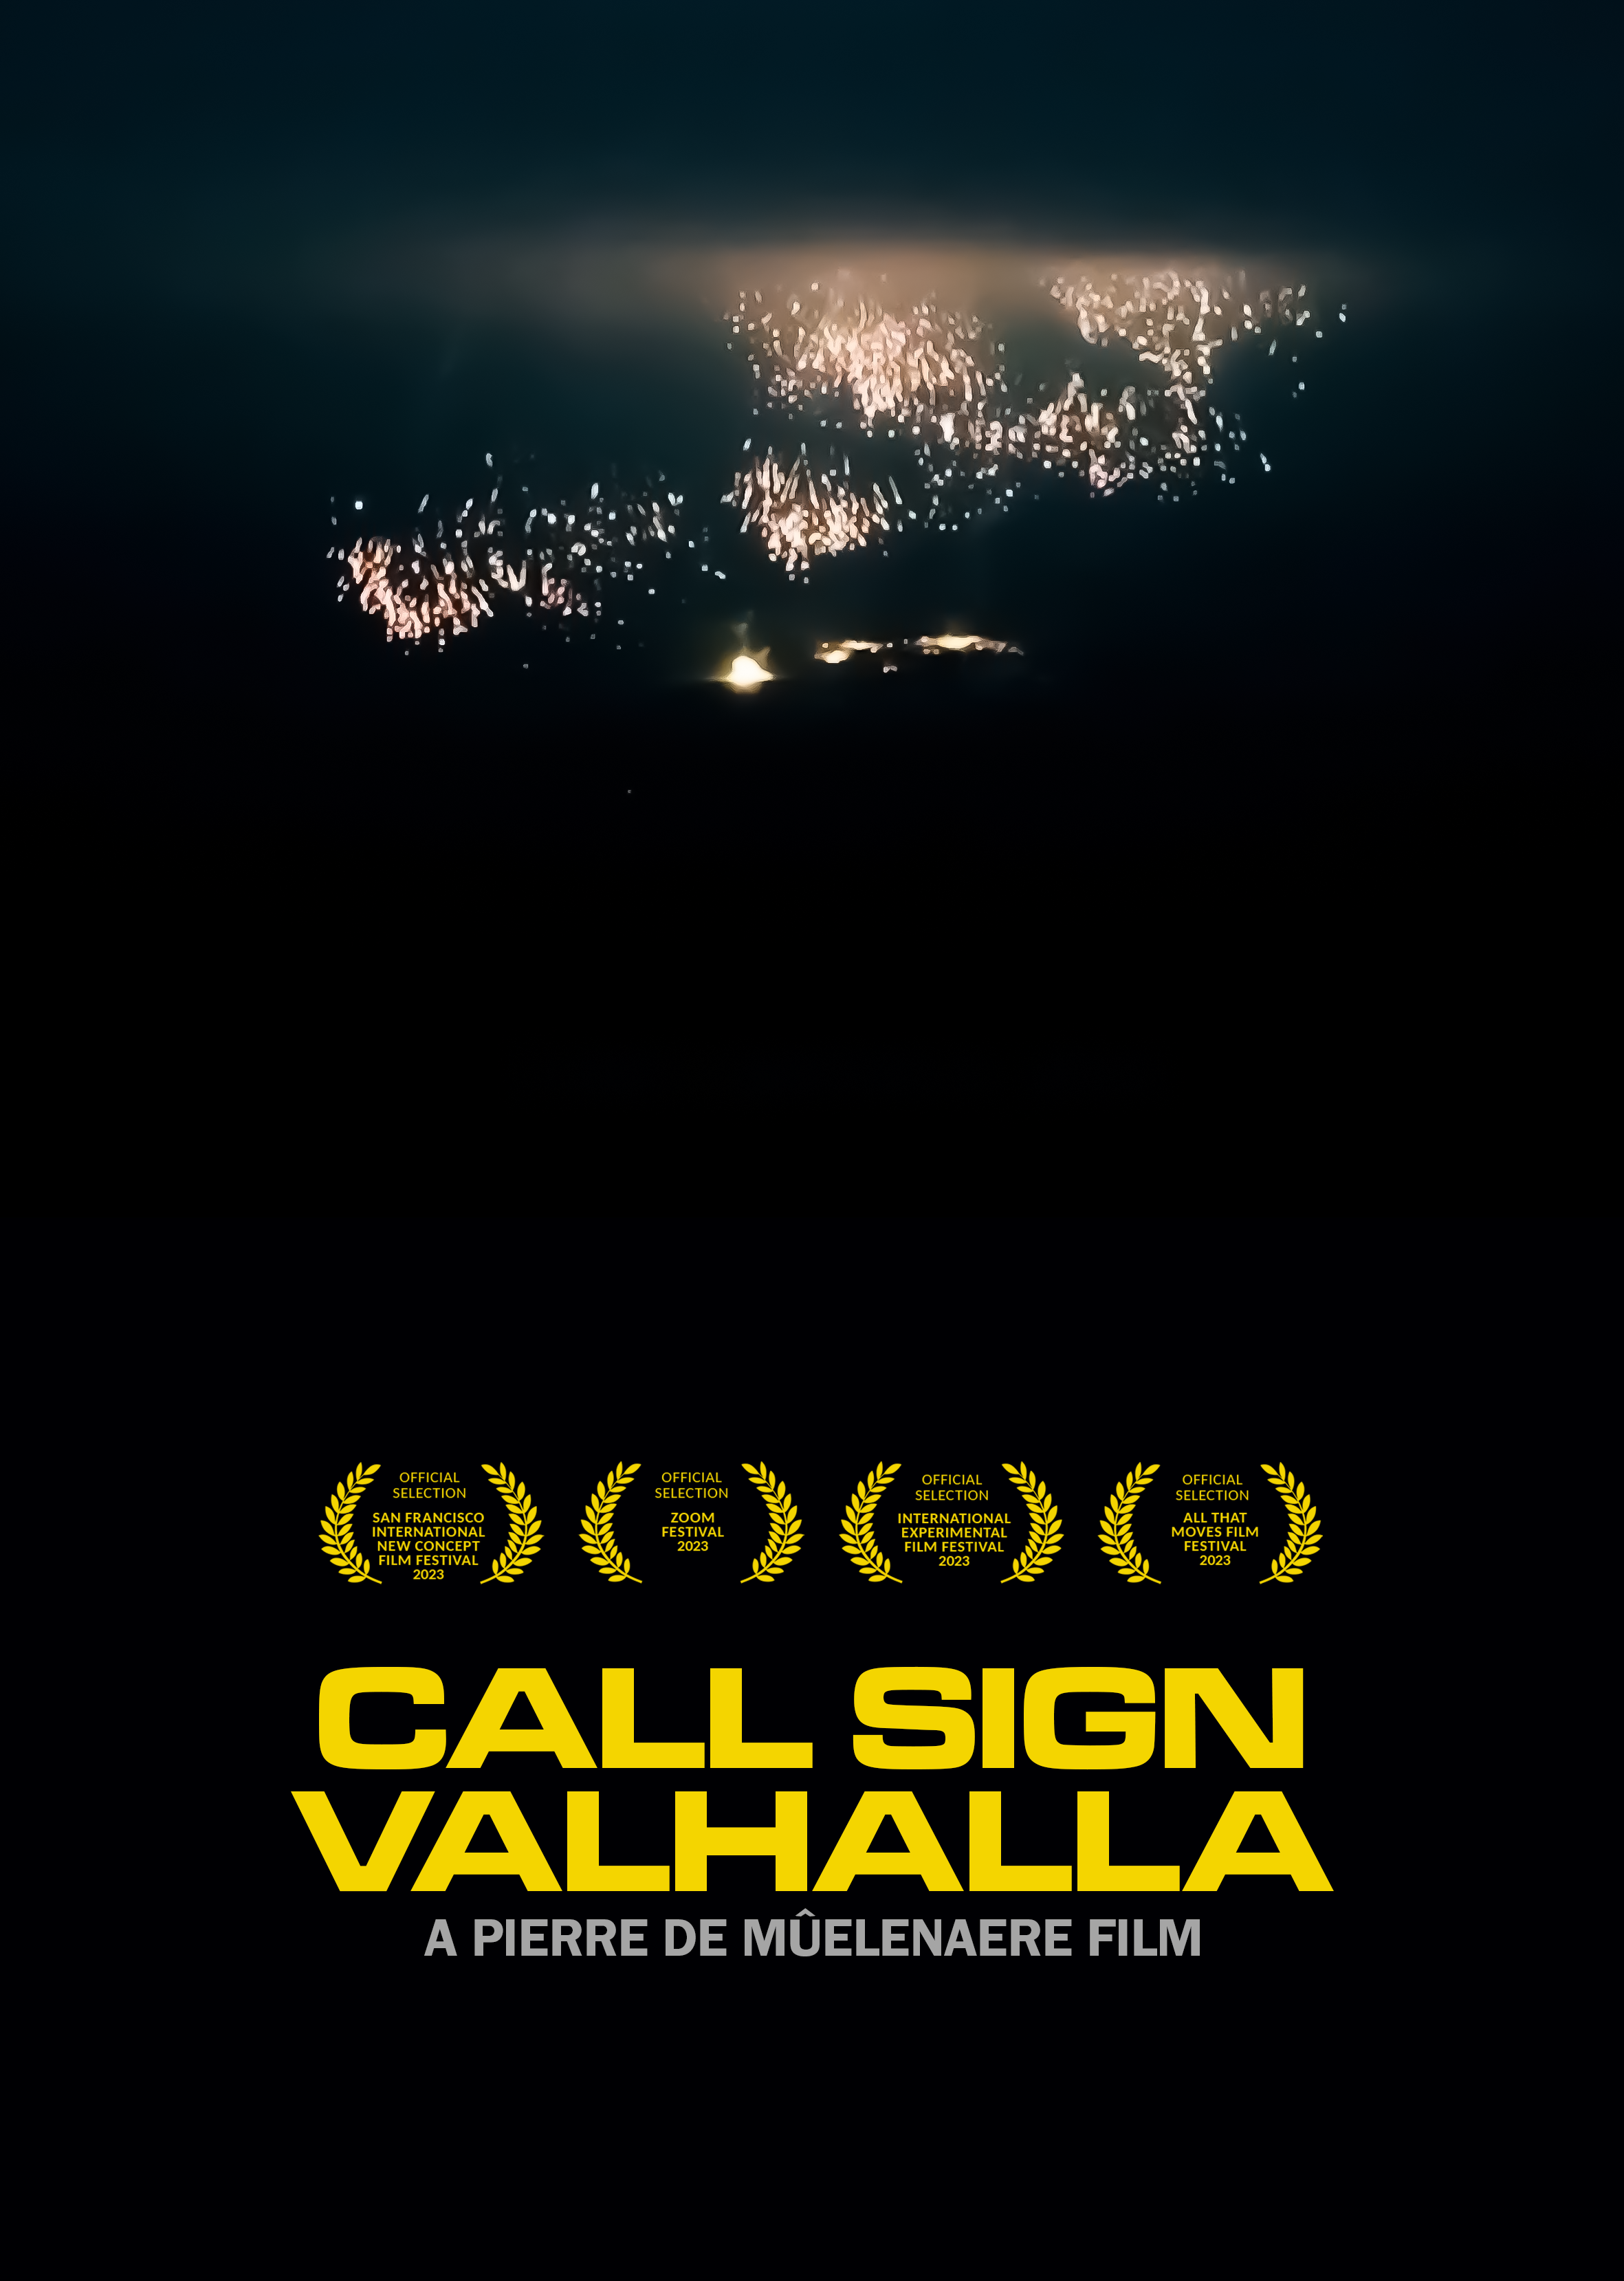 Call Sign Valhalla a Pierre de Muelenaere film